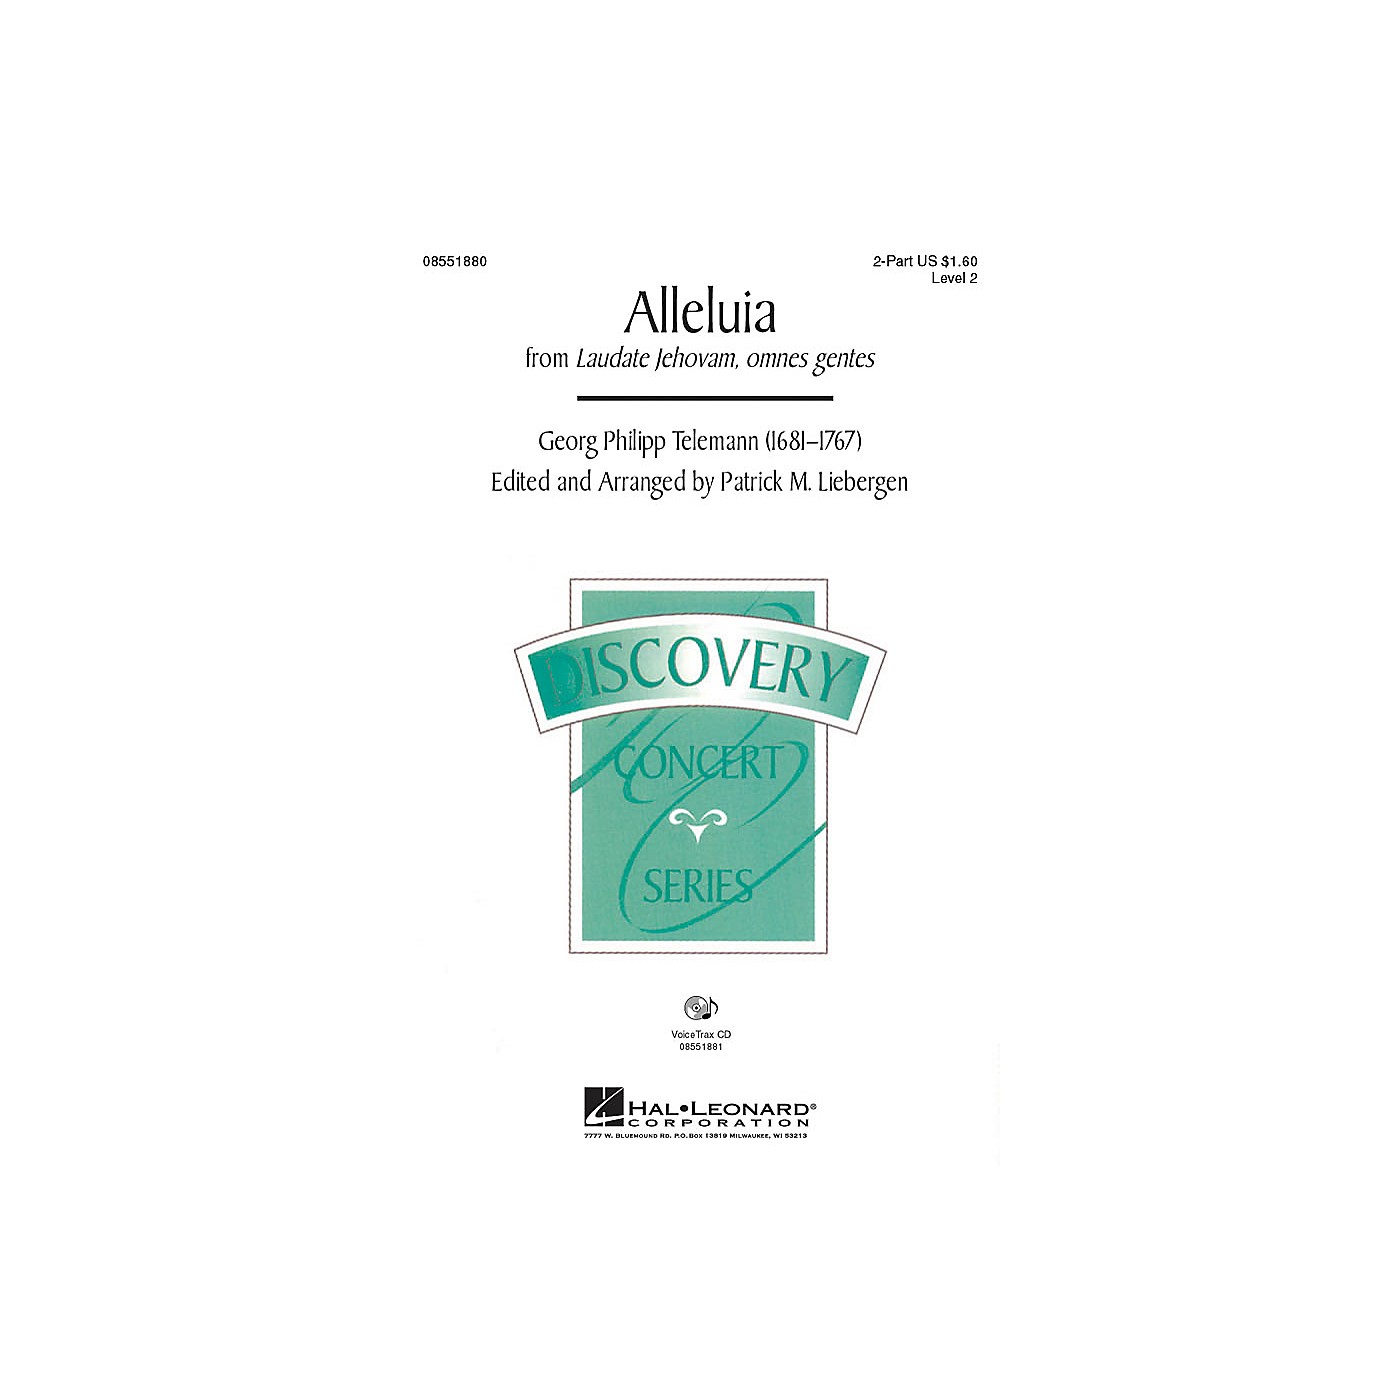 Hal Leonard Alleluia (from Laudate Jehovam, omnes gentes) VoiceTrax CD Arranged by Patrick M. Liebergen thumbnail